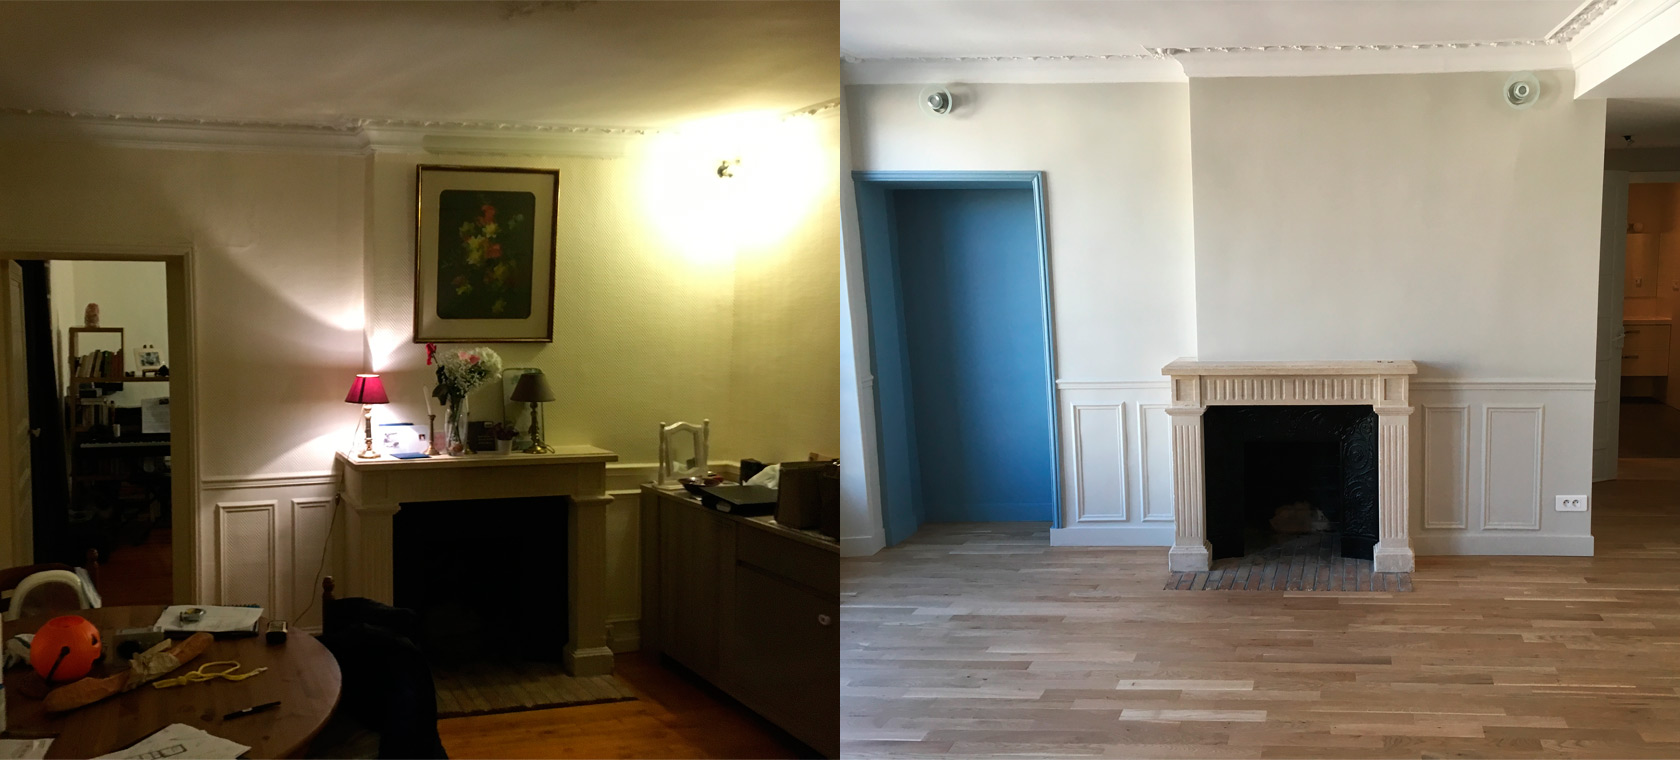 Rénovation appartement charme Chantilly salon